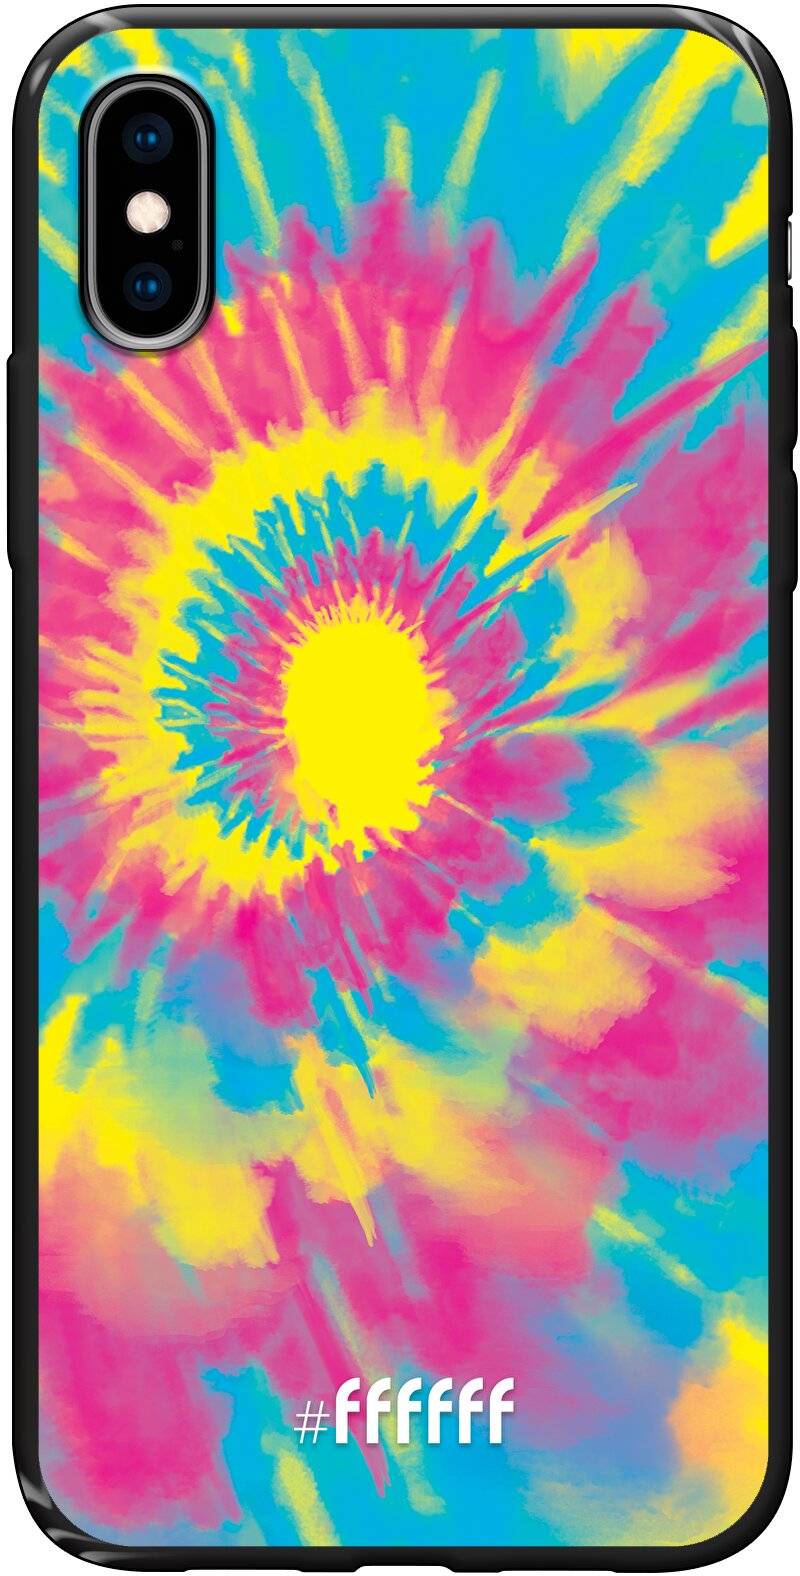 Psychedelic Tie Dye iPhone X